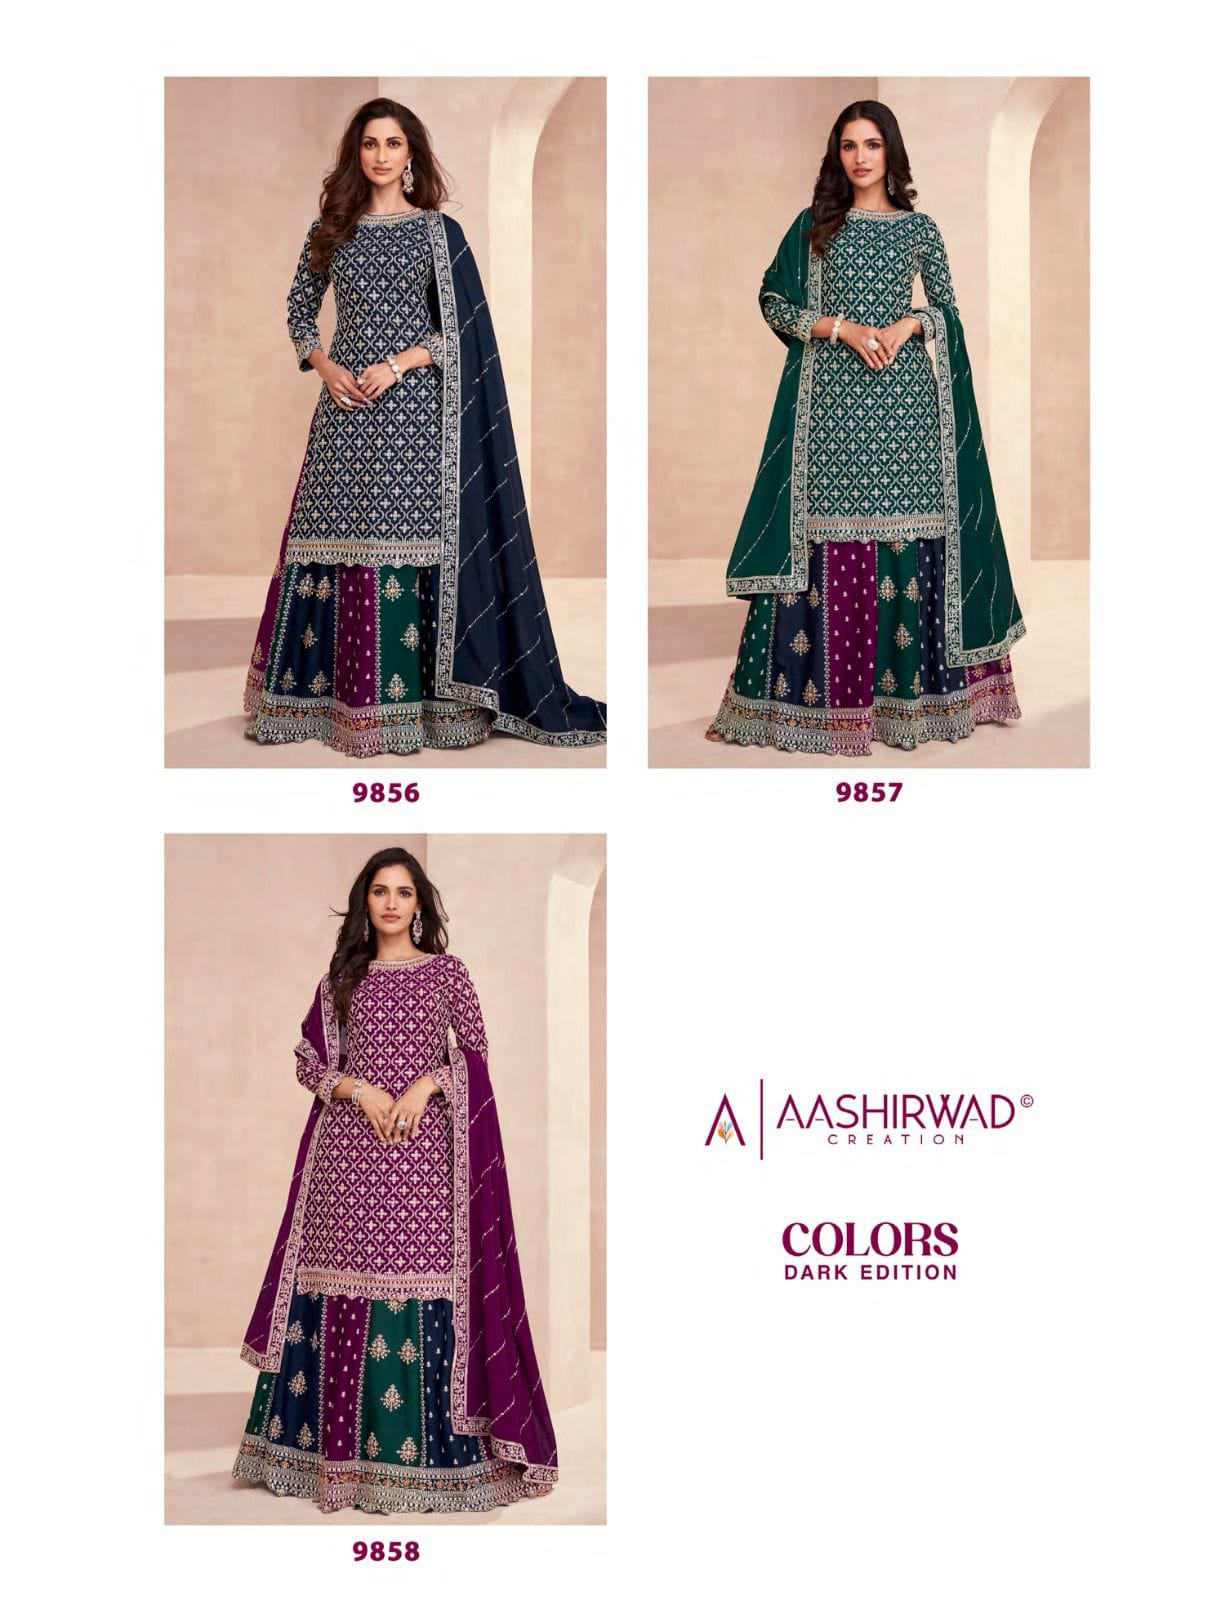 Aashirwad Colors Dark Eddition collection 1